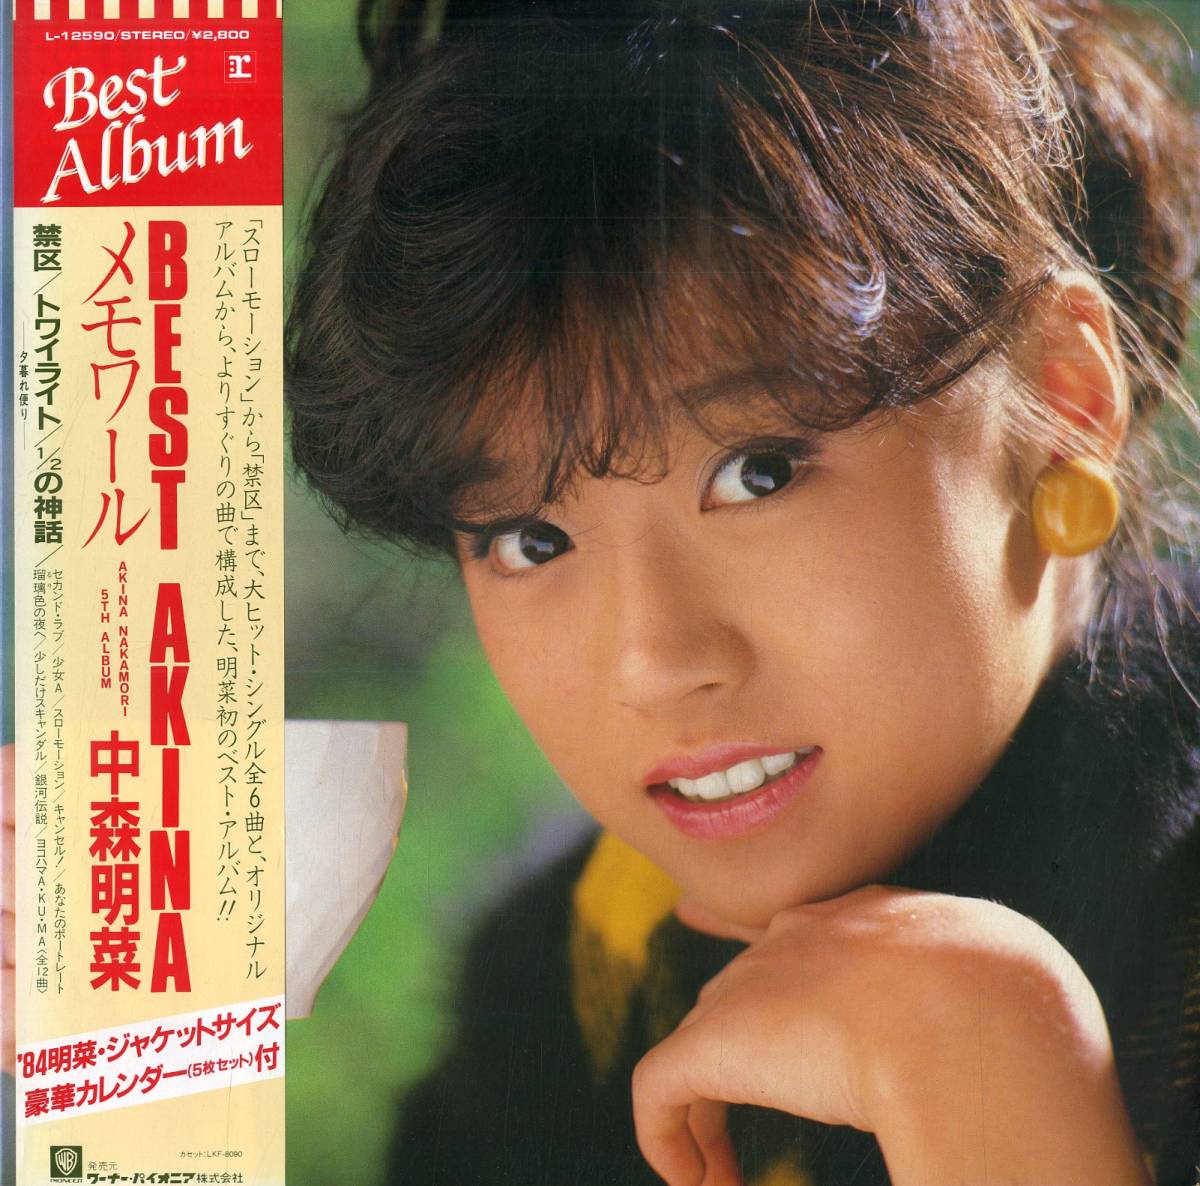 A00552556/LP/中森明菜「Best Akina メモワール (1983年・L-12590